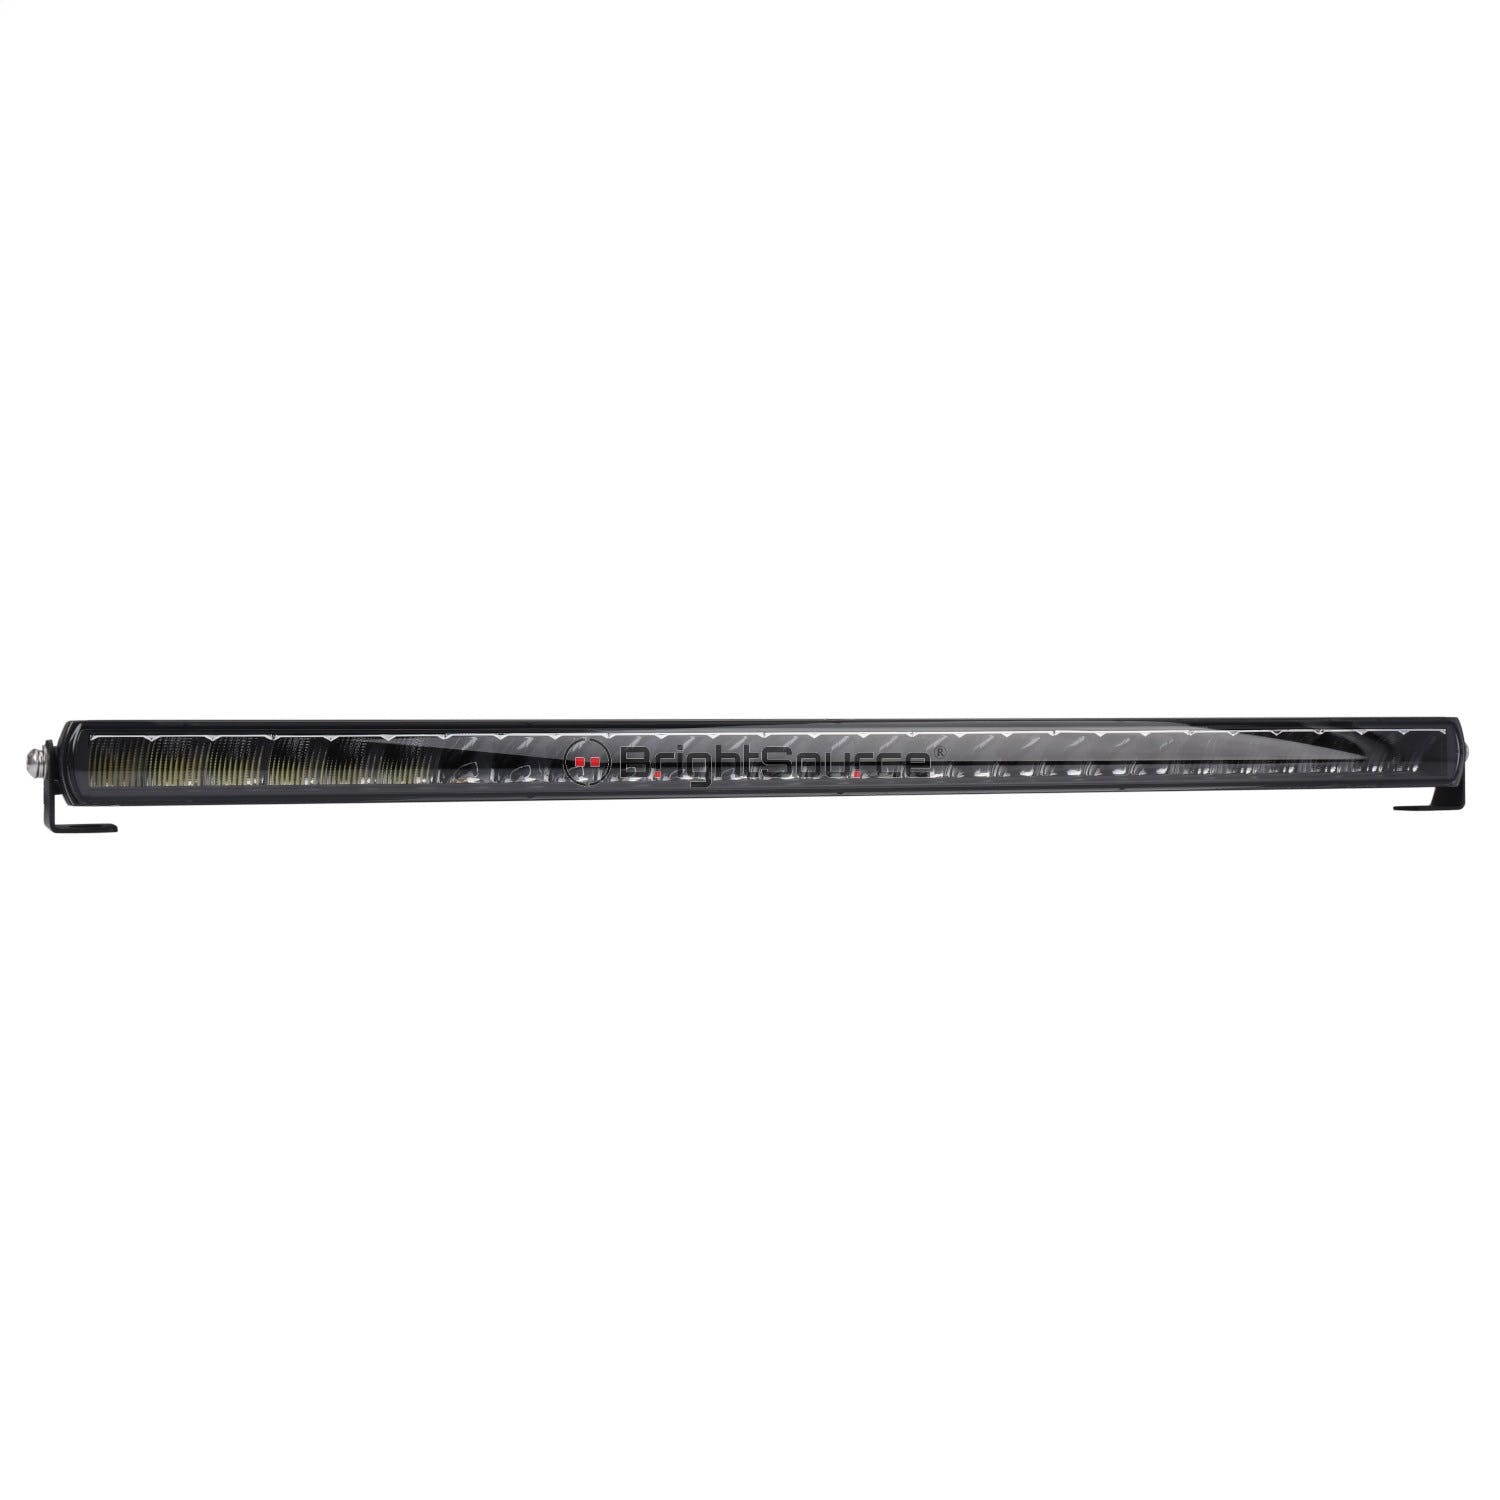 BrightSource 30 inch Titanium E-Marked Single Row LED Light Bar 771302